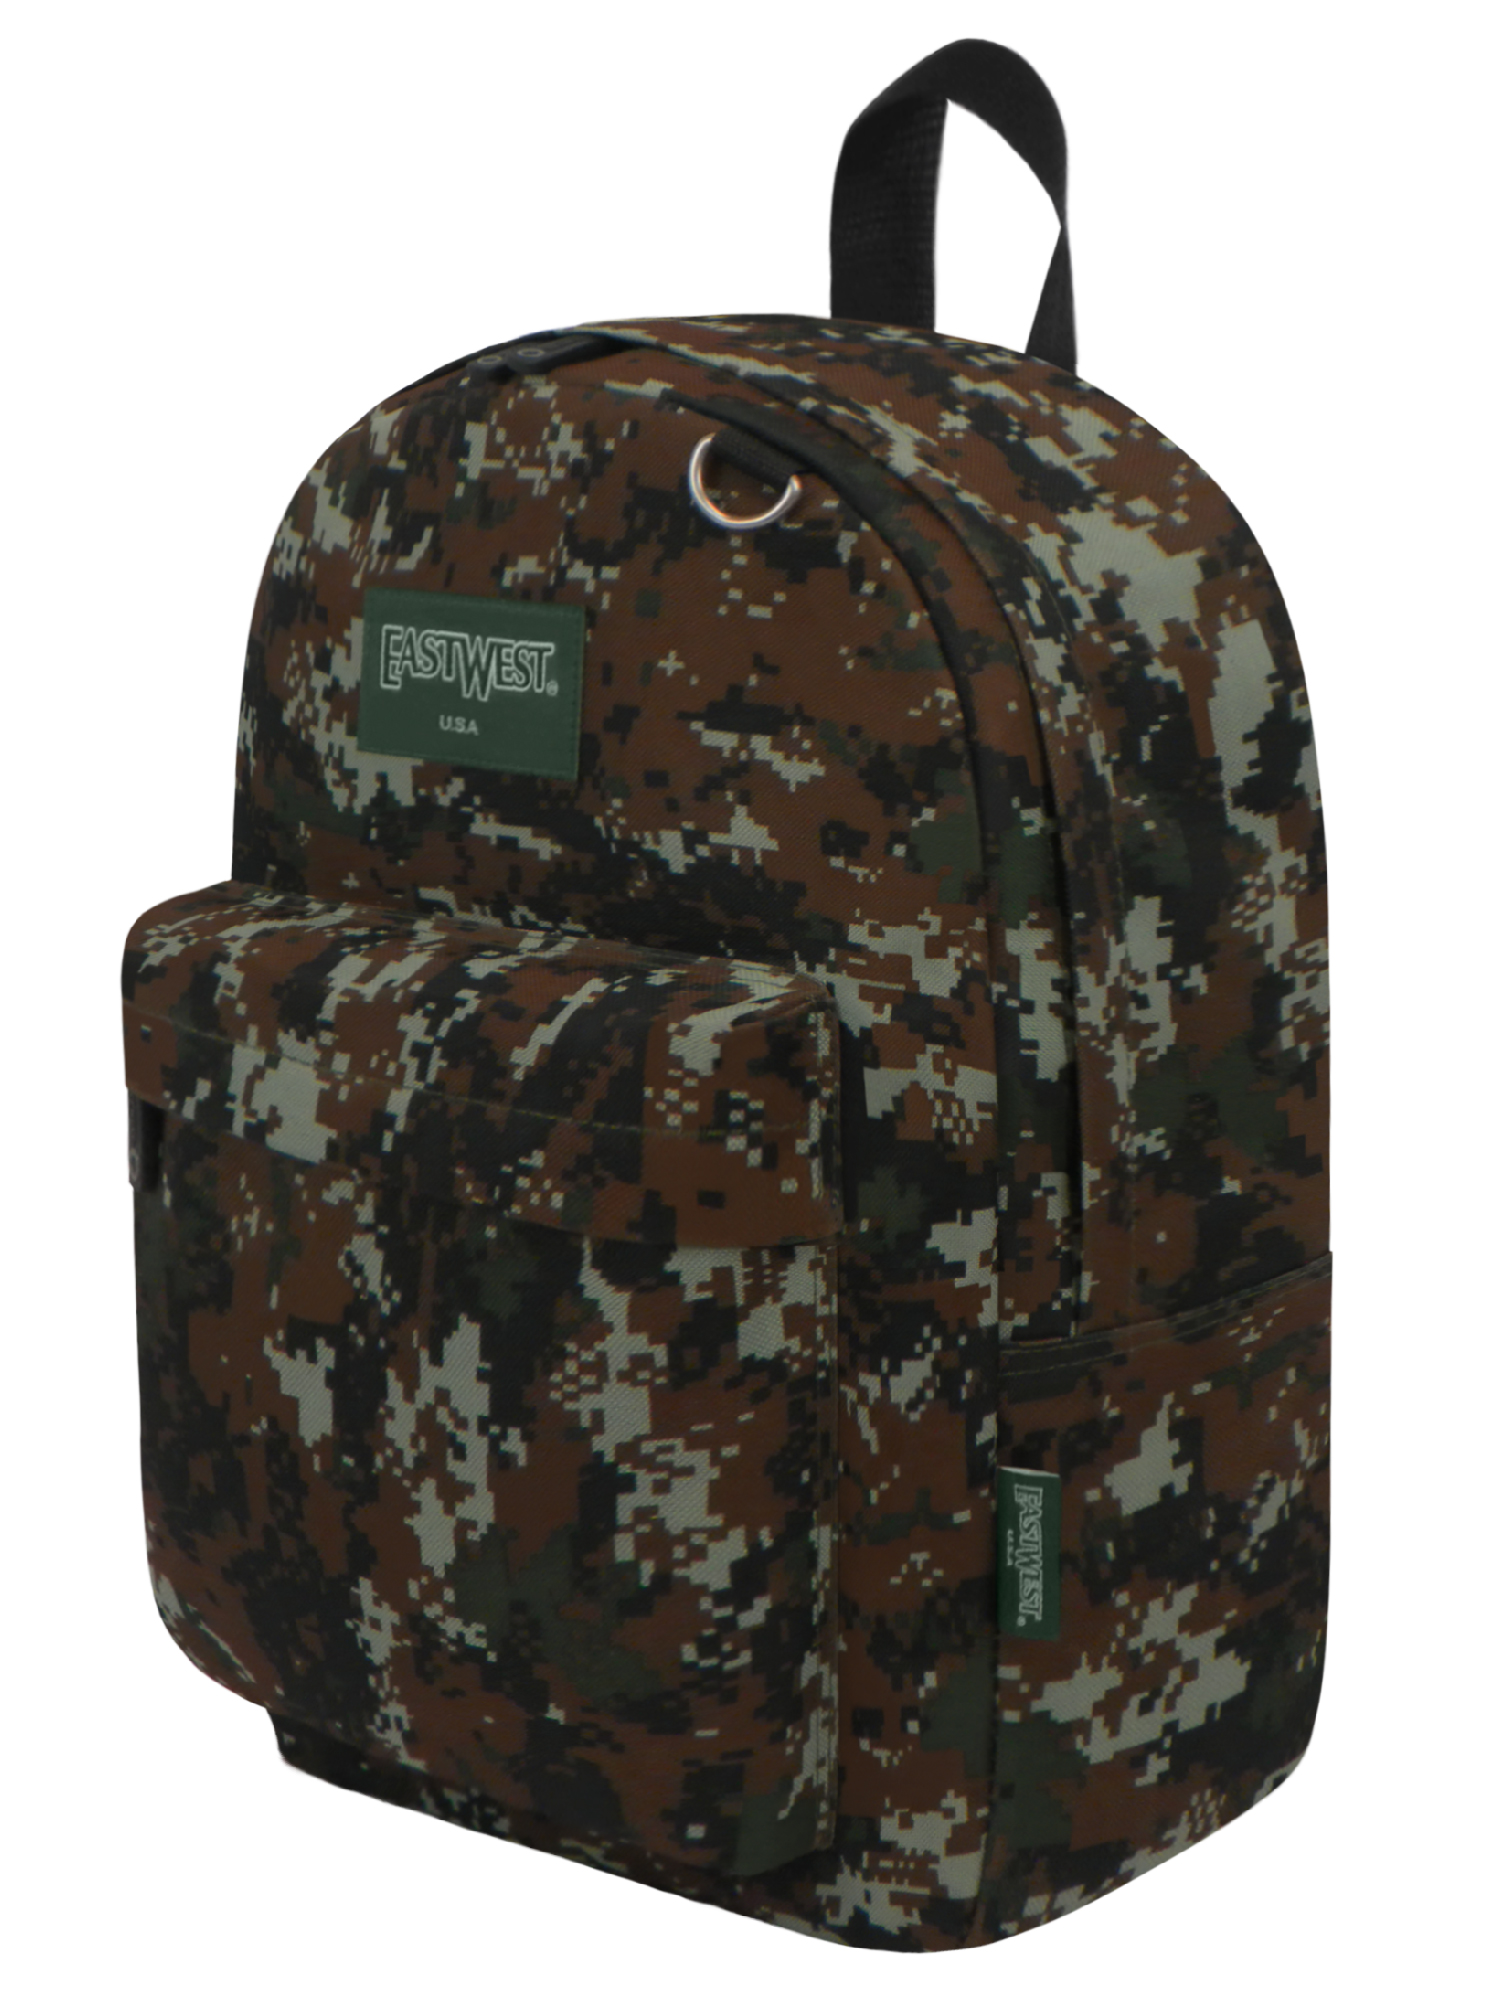 Classic Camo Backpack - Green ACU - image 2 of 5